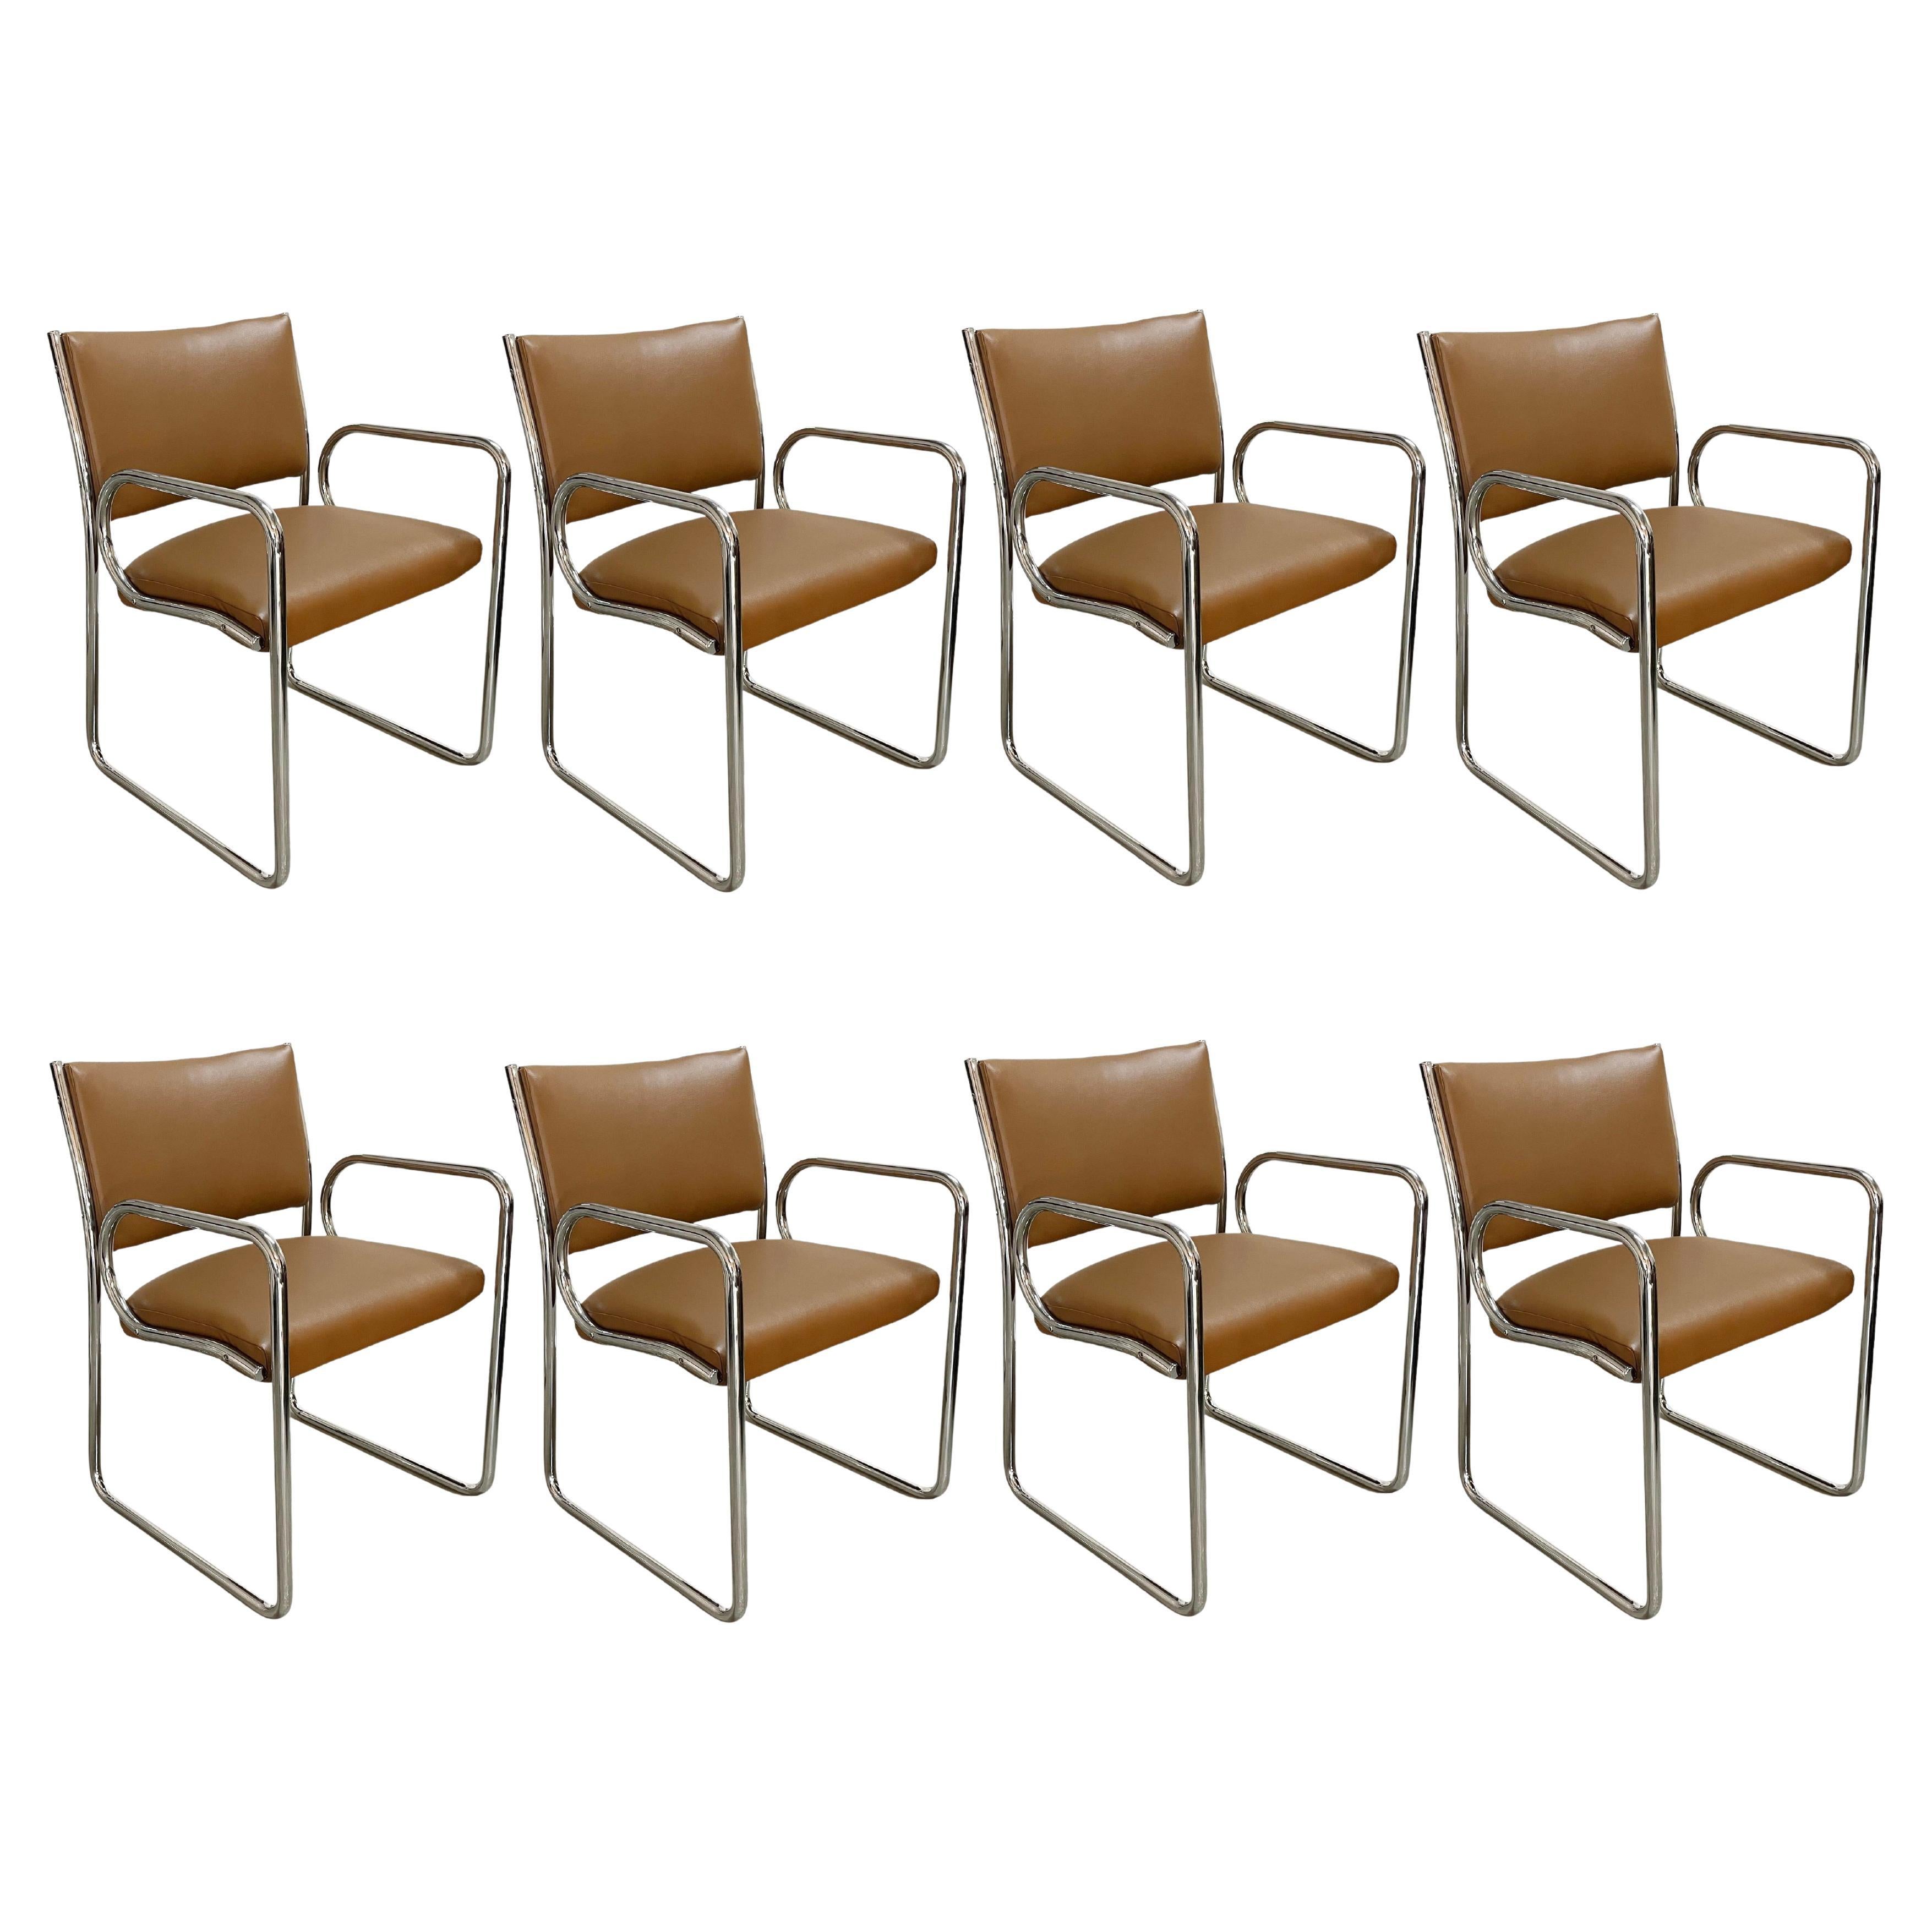 Eight Charles Gibilterra designed Mid-Century Modern Tubular Dining Chairs